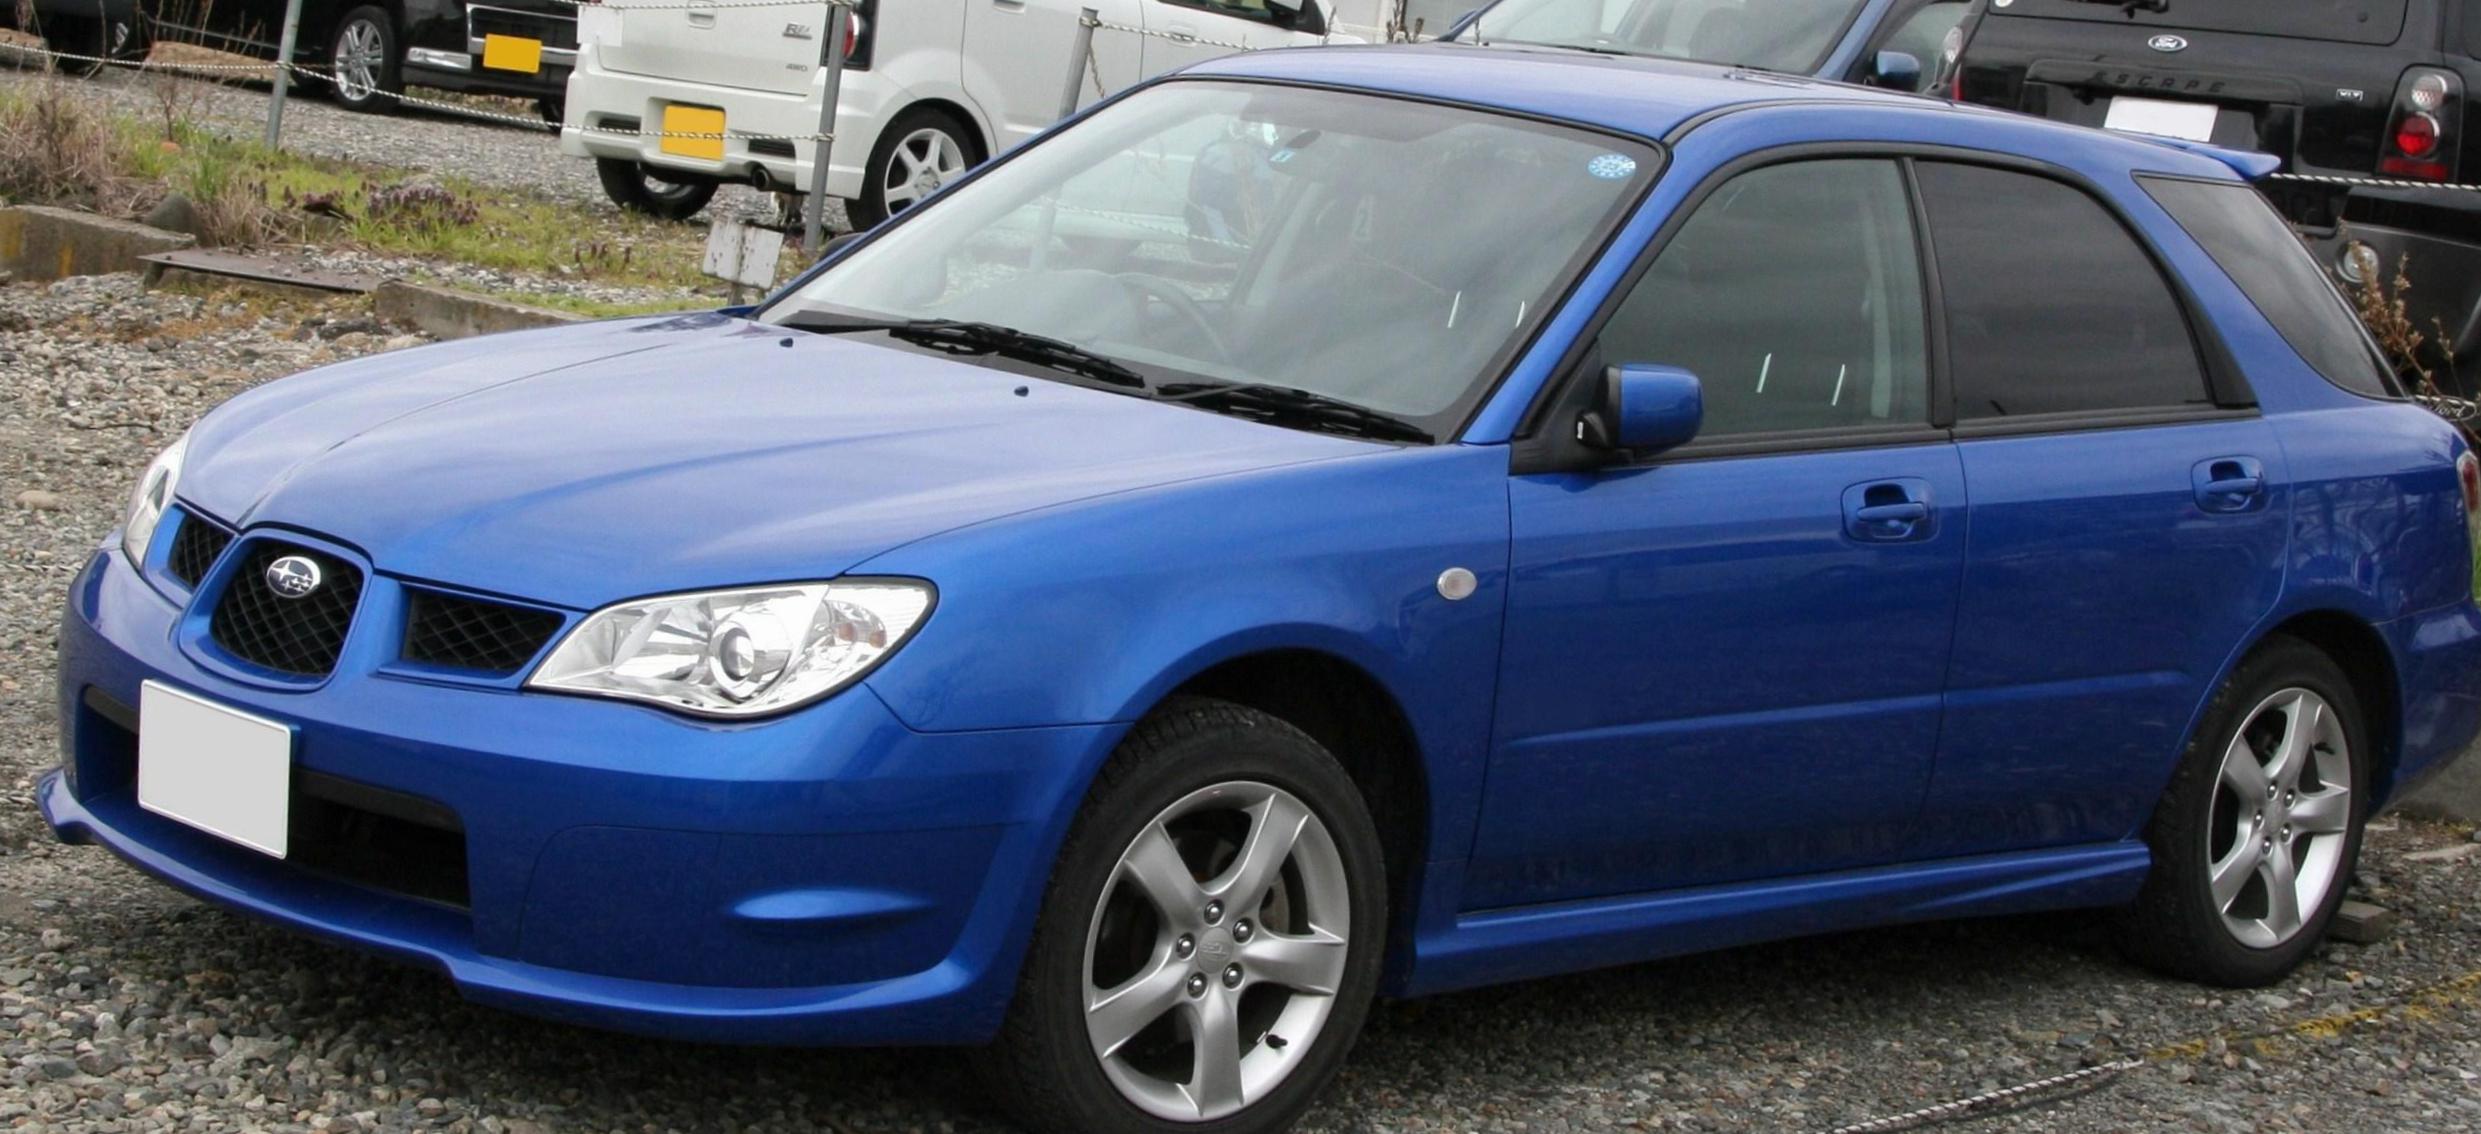 Impreza Subaru new sedan